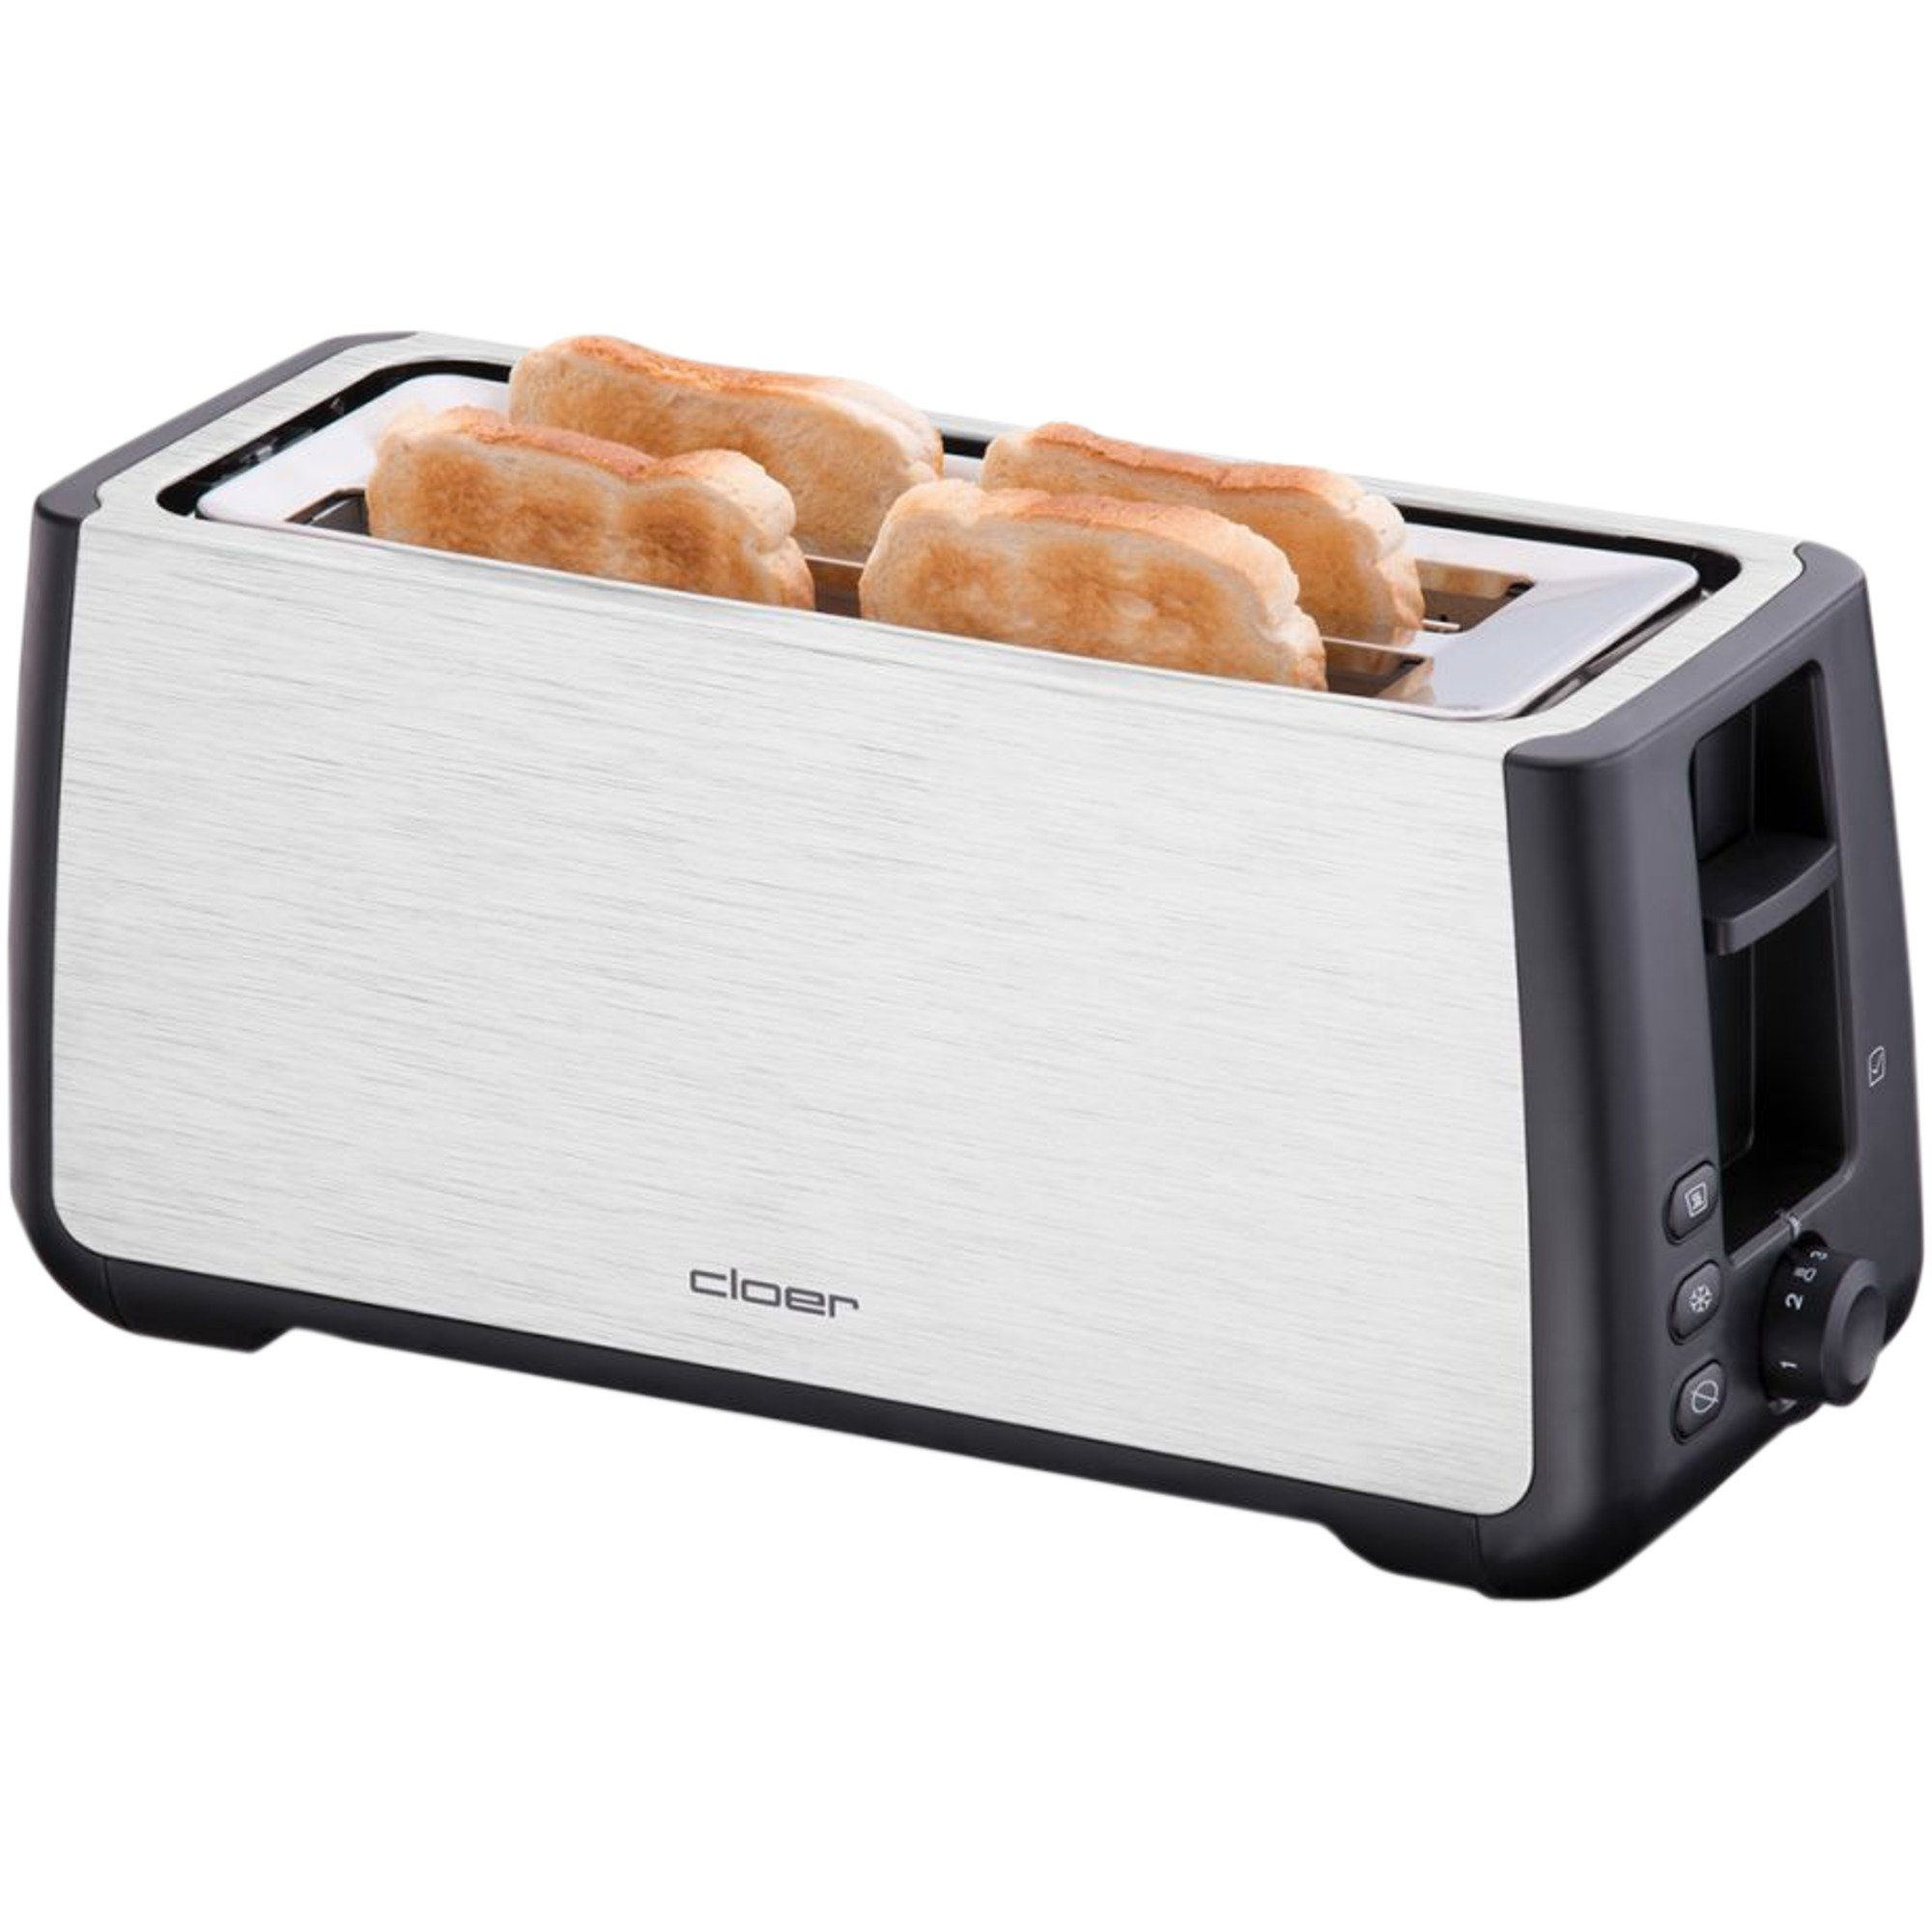 Cloer Toaster King-Size-Toaster 3579